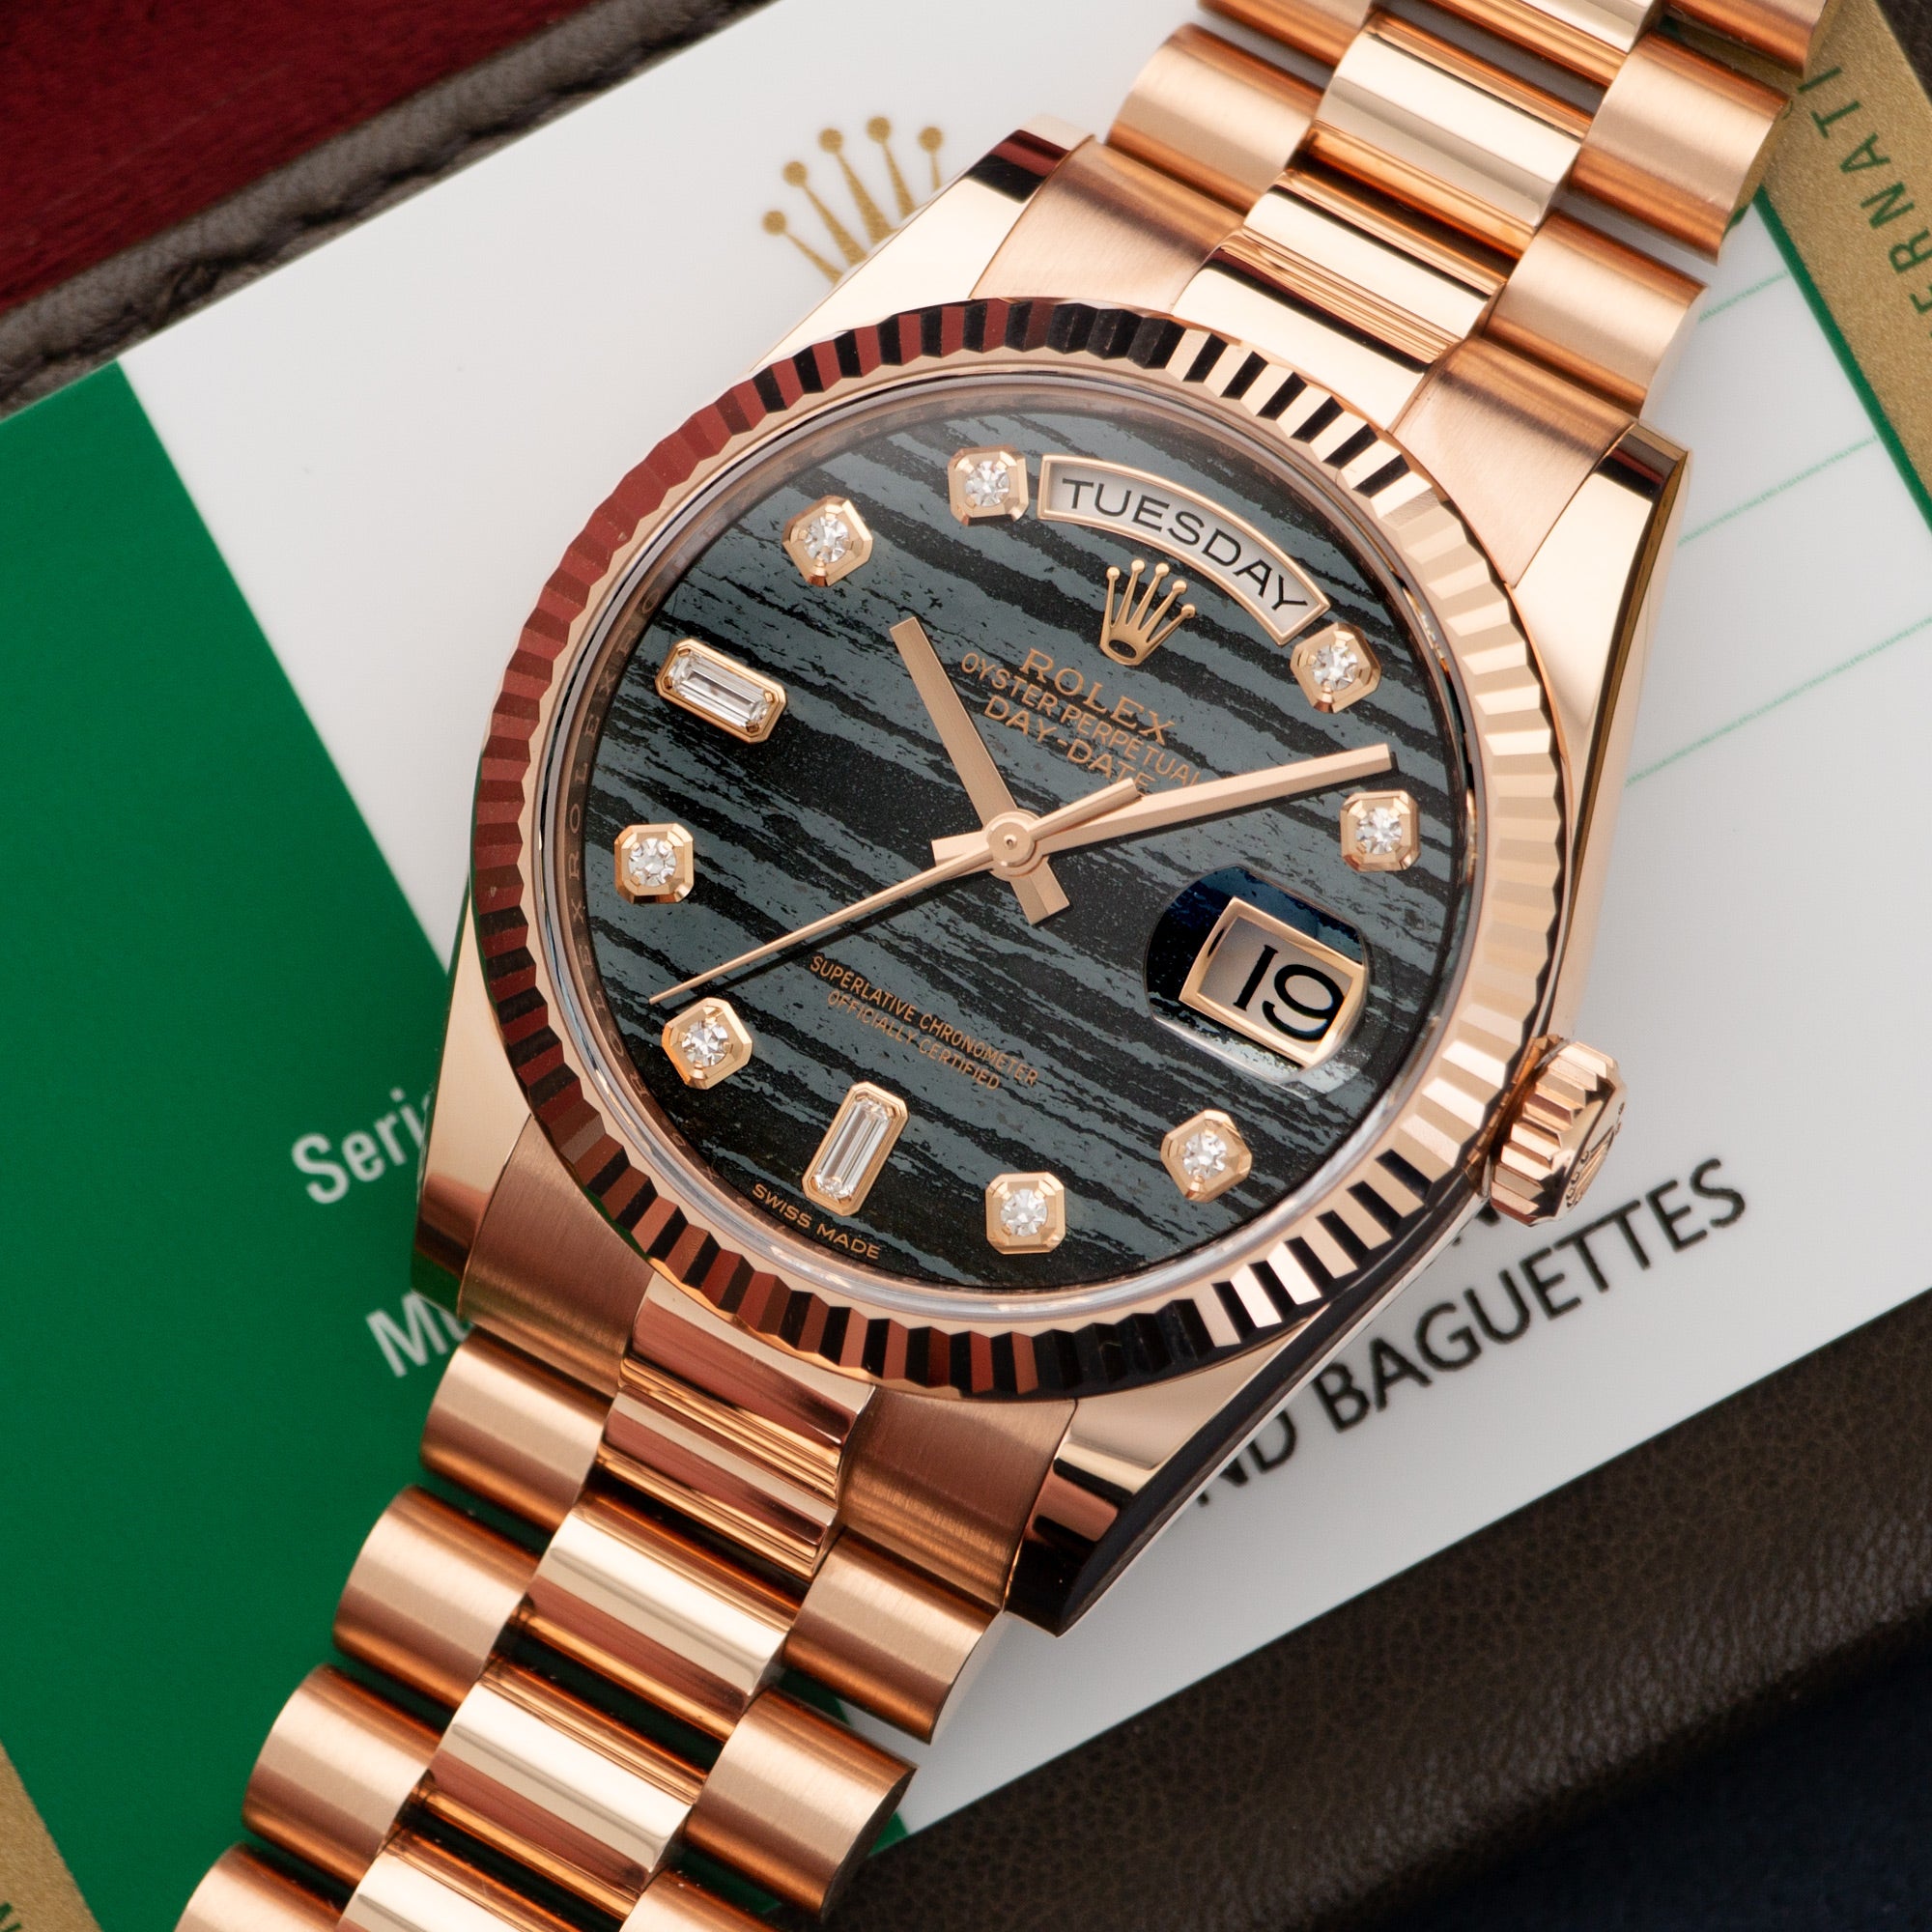 Rolex - Rolex Rose Gold Day-Date Everose Ferrite Diamond Watch Ref. 118235 - The Keystone Watches